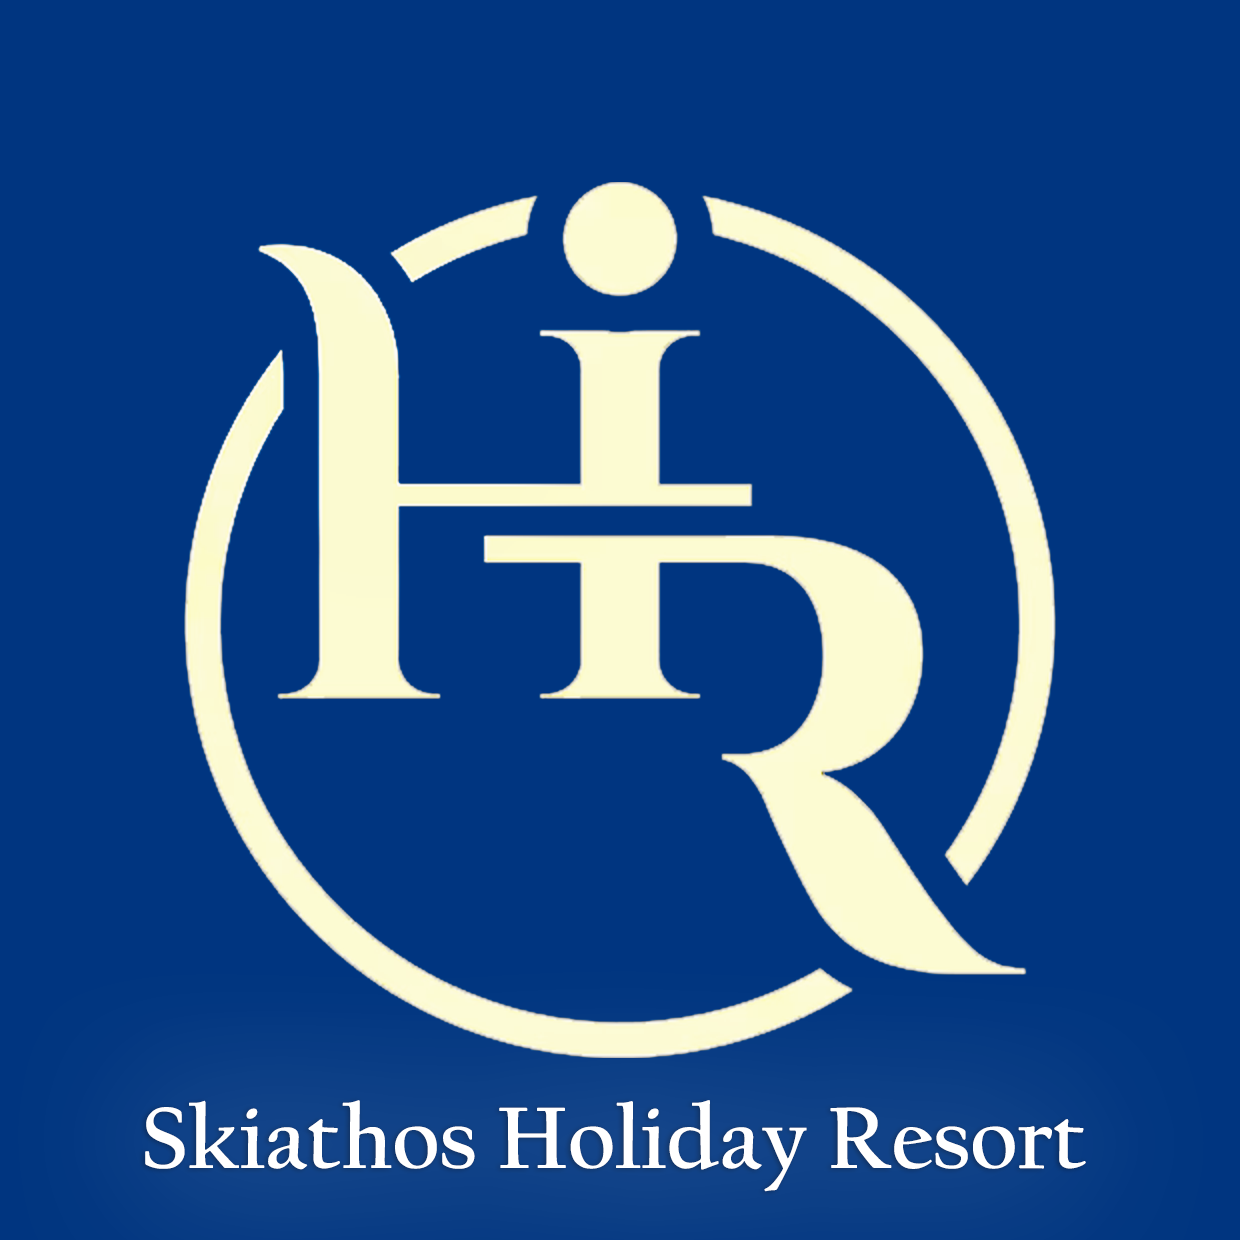 Skiathos Holiday Resort | Acitivities - Skiathos Holiday Resort